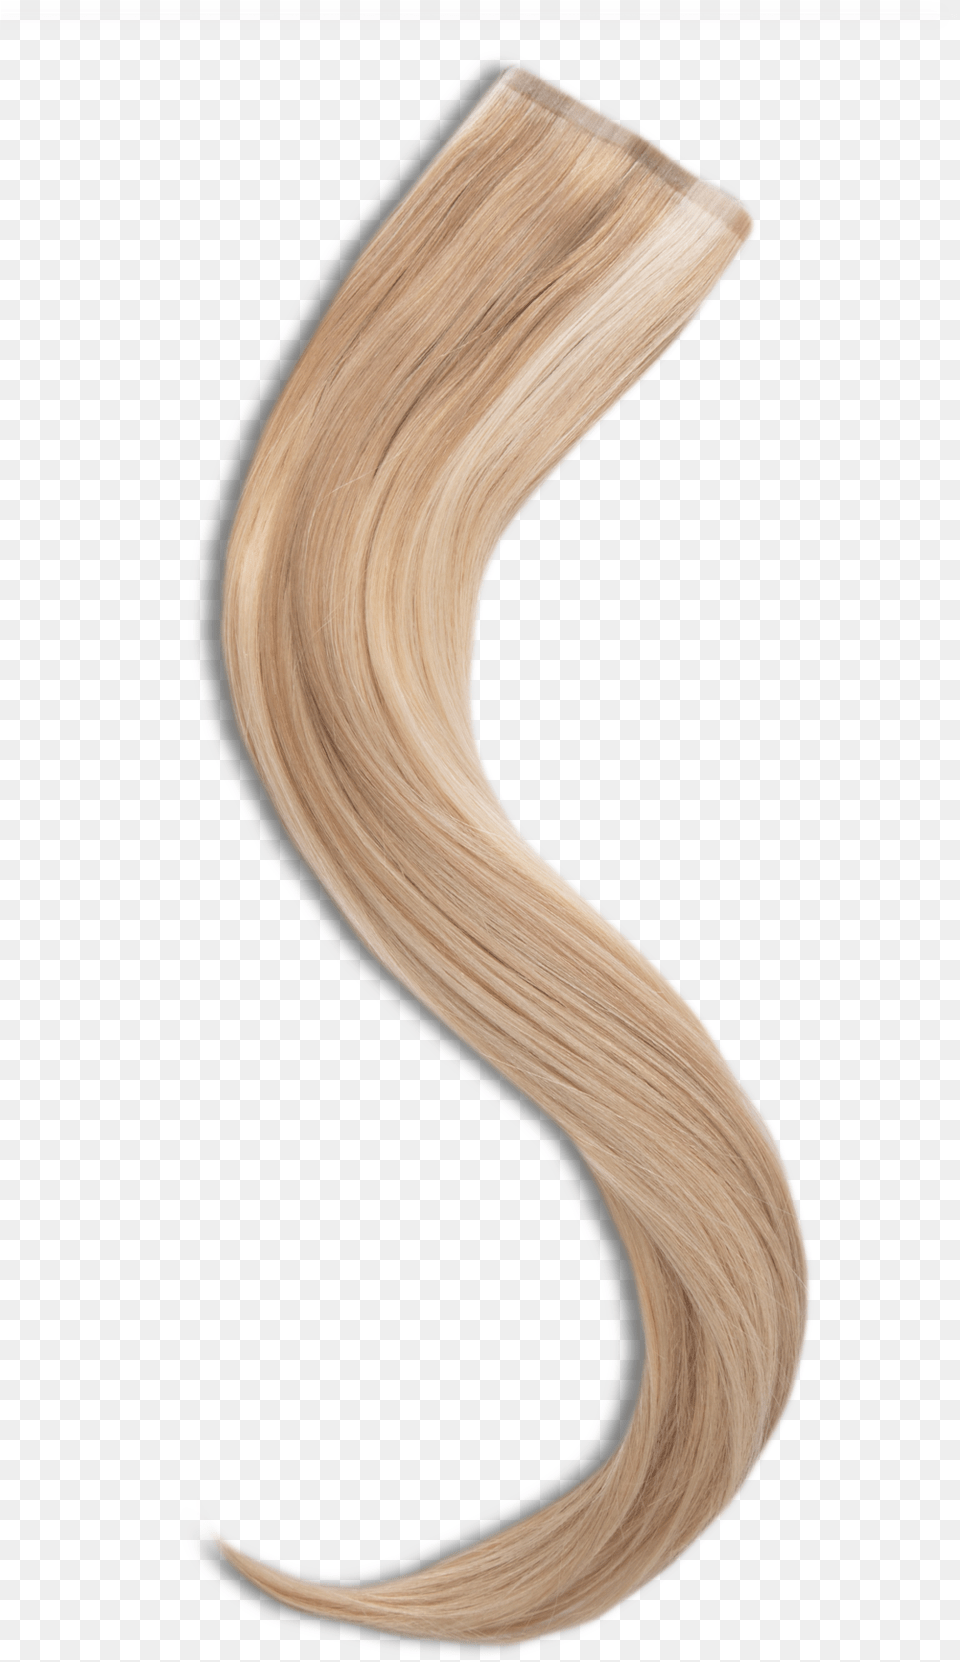 Ba 8a12sbc Strands Of Hair Cut, Wood, Plywood, Cutlery Png Image